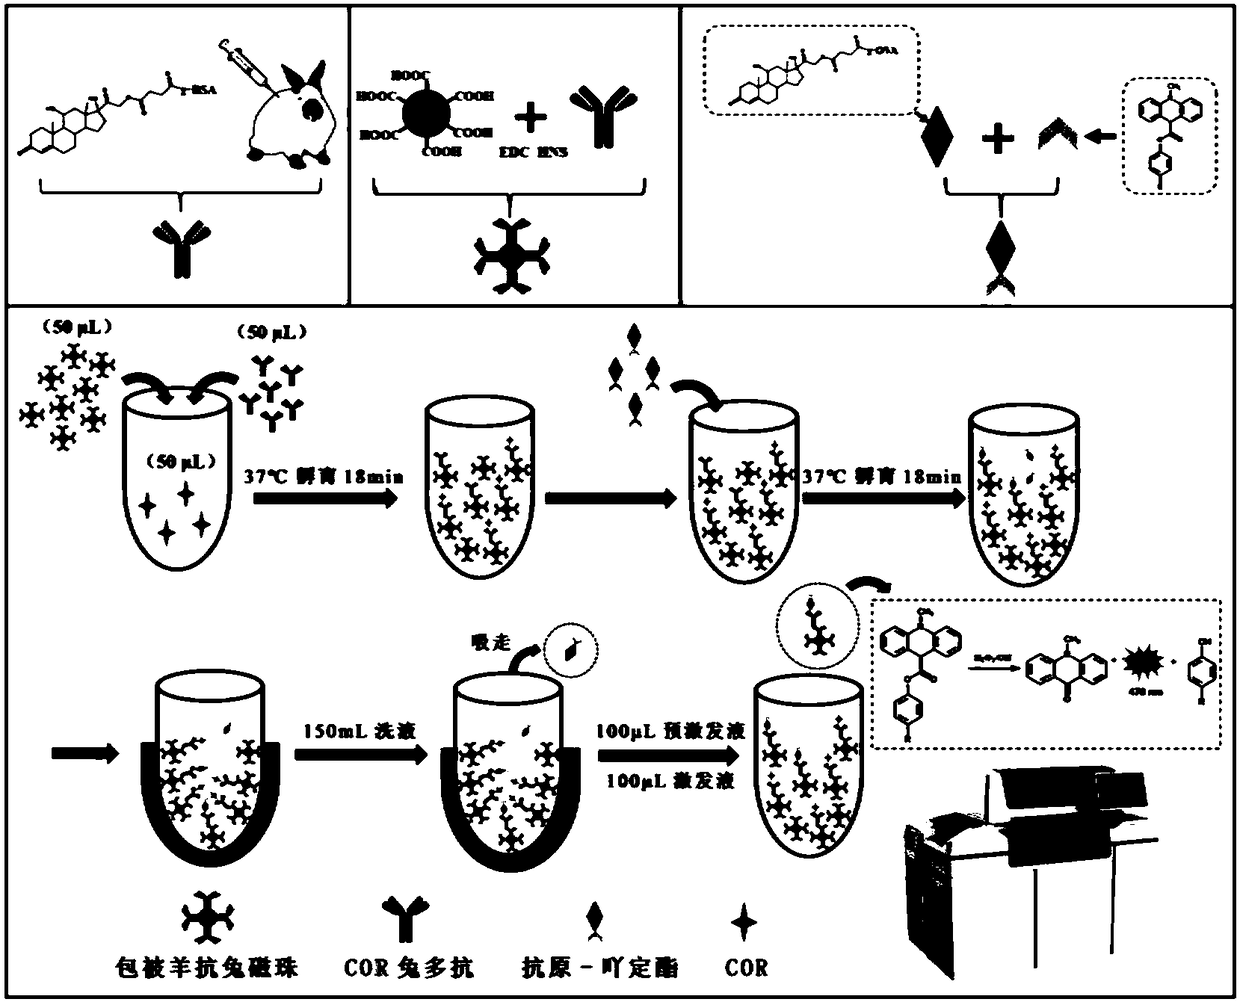 Magnetic particle-based hydrocortisone chemiluminescence immune assay method and kit